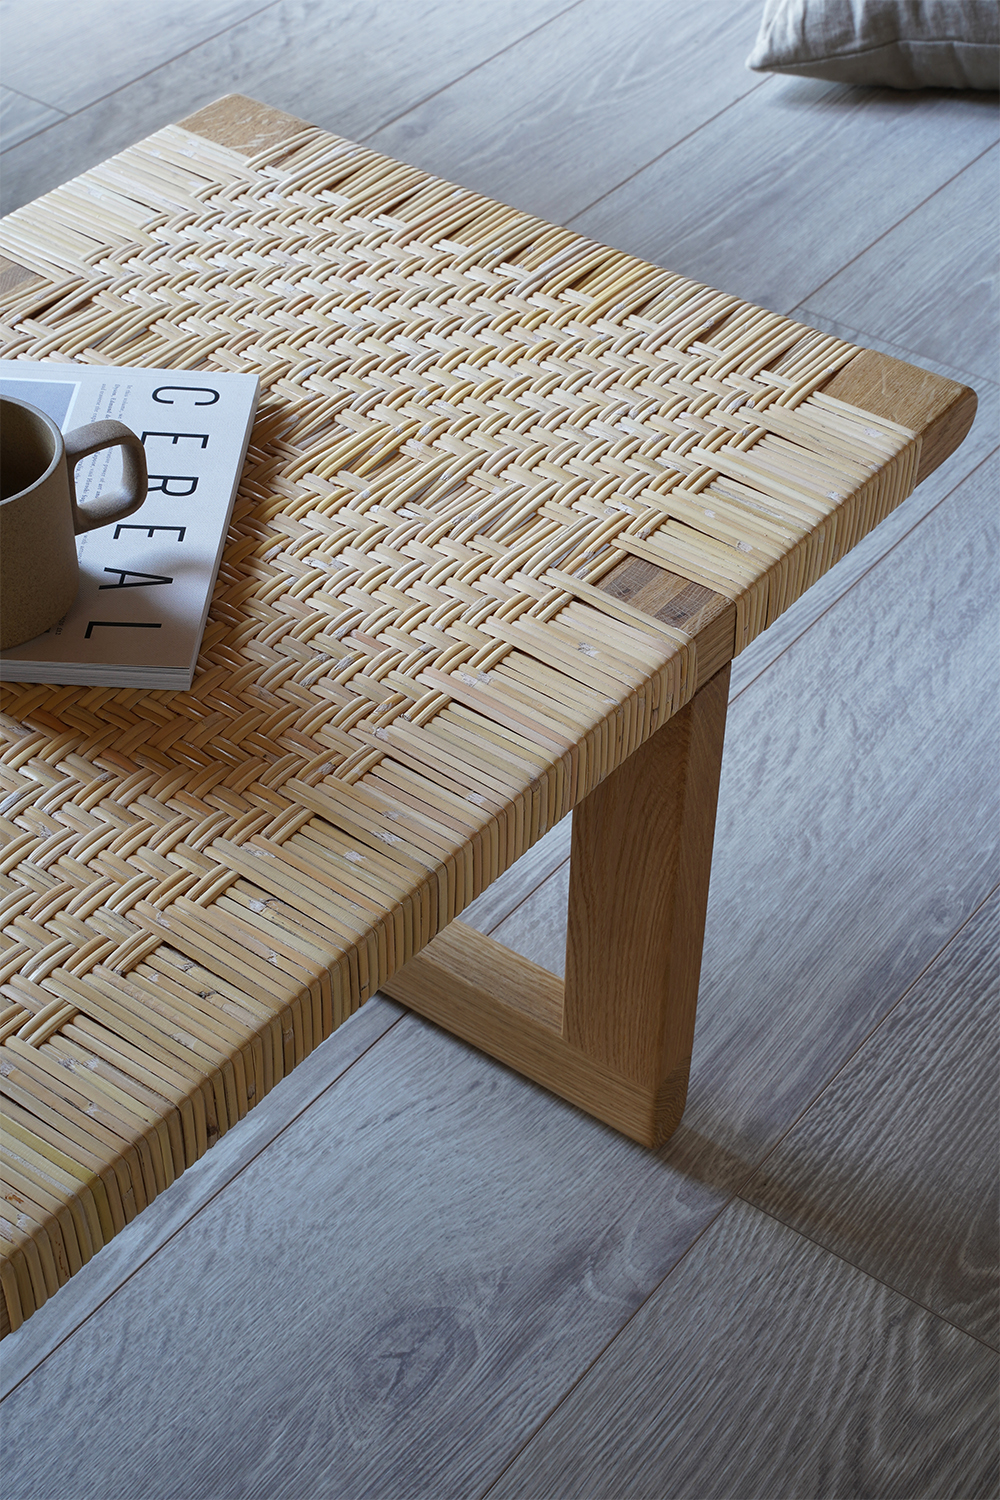 A new Danish Design Classic - The BM0488 Table Bench by Carl Hansen & Son